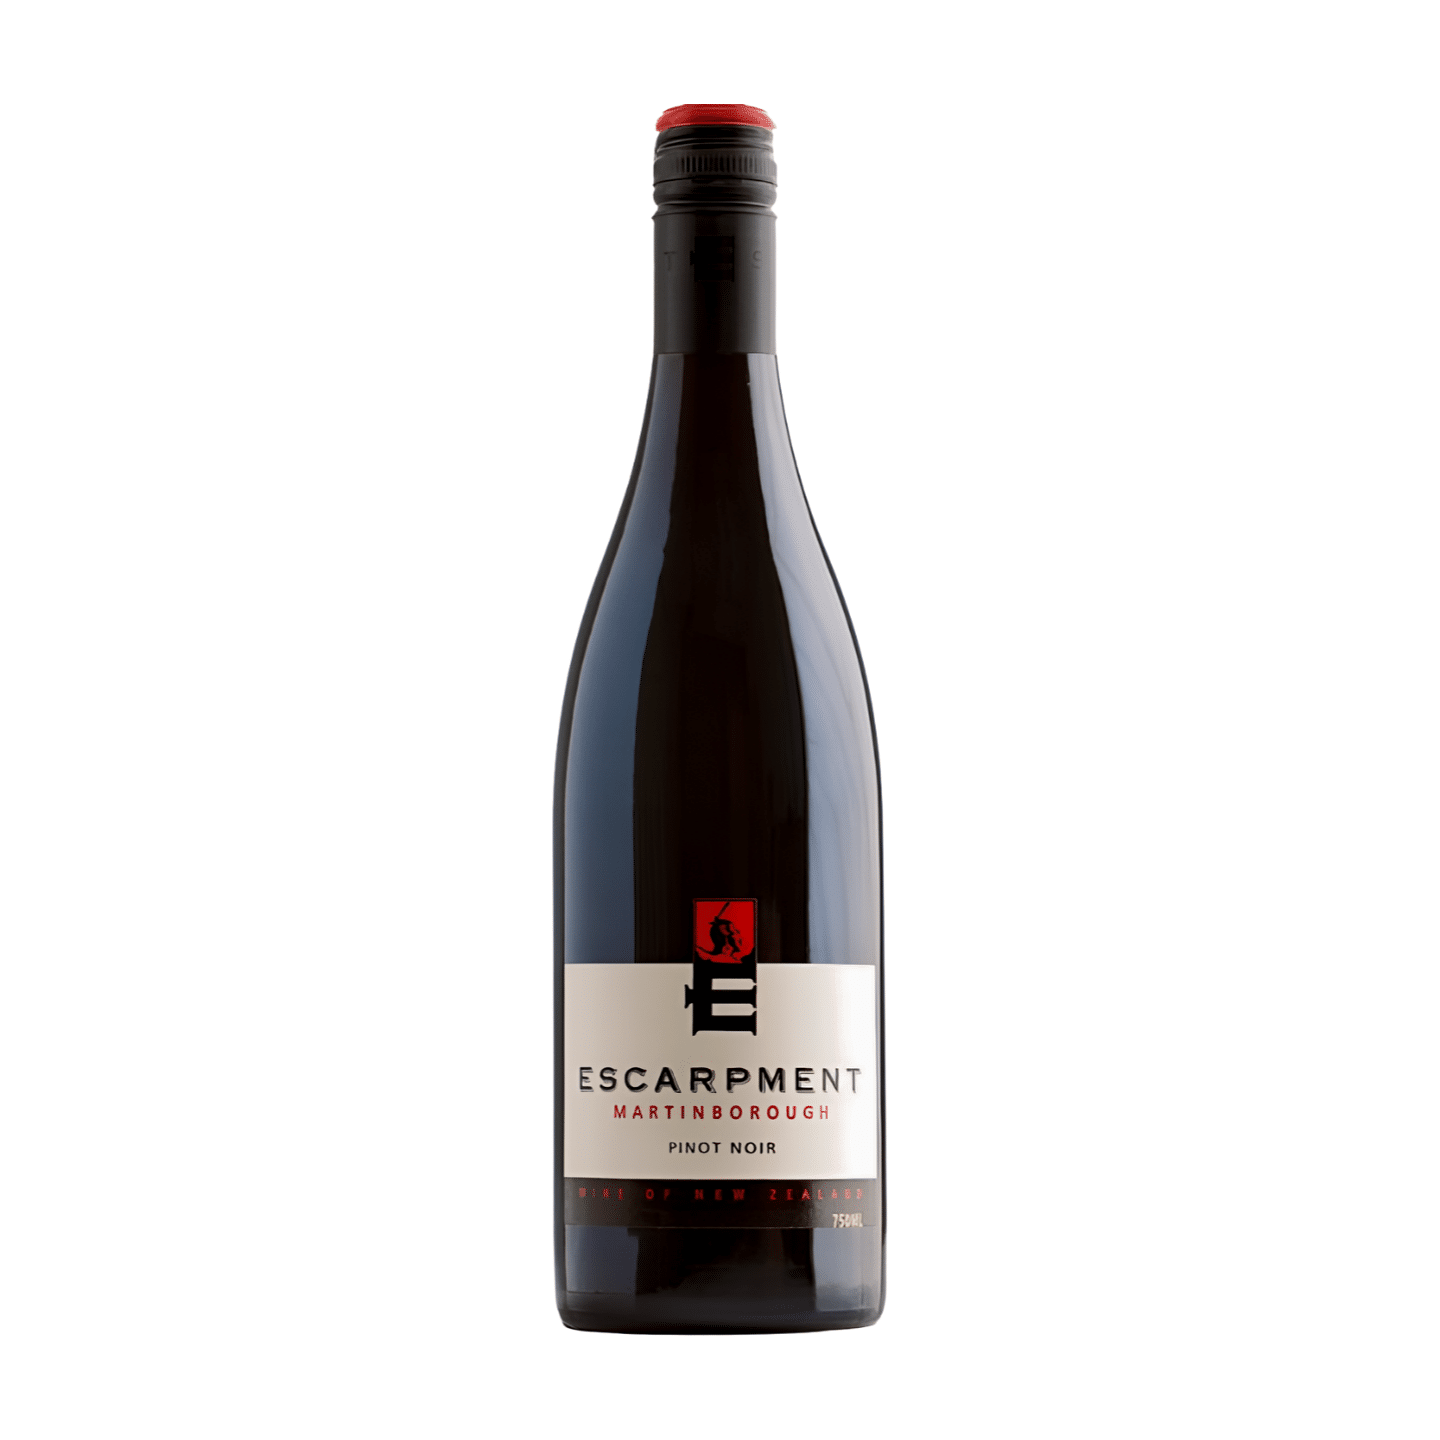 Escarpment Pinot Noir 2015